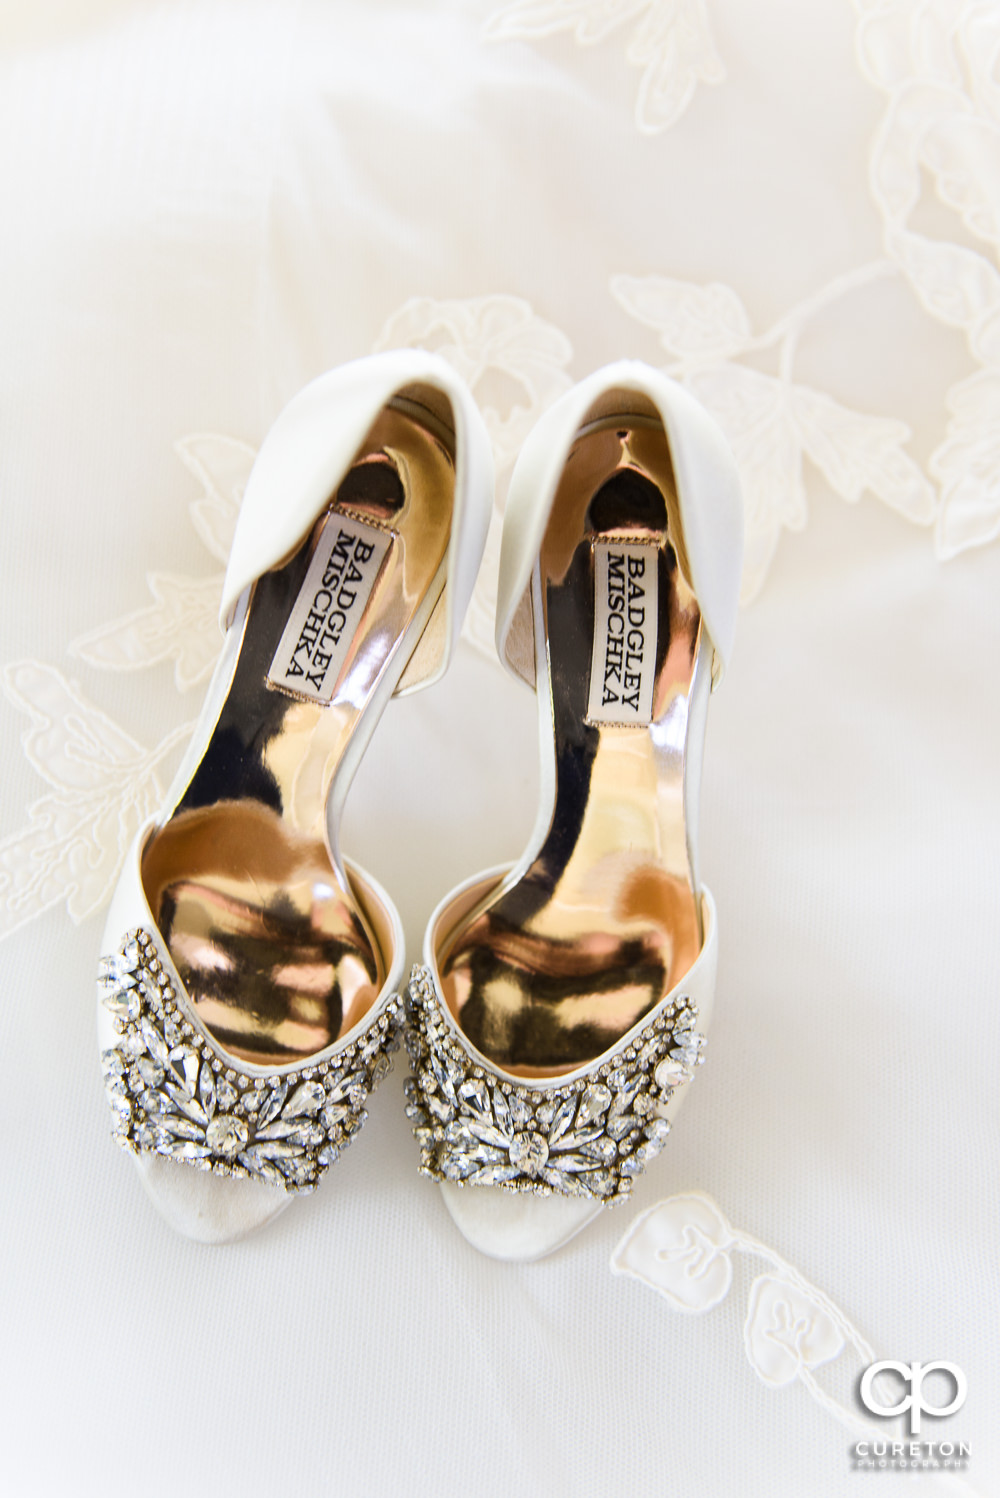 Badgley Mischka bridal shoes.